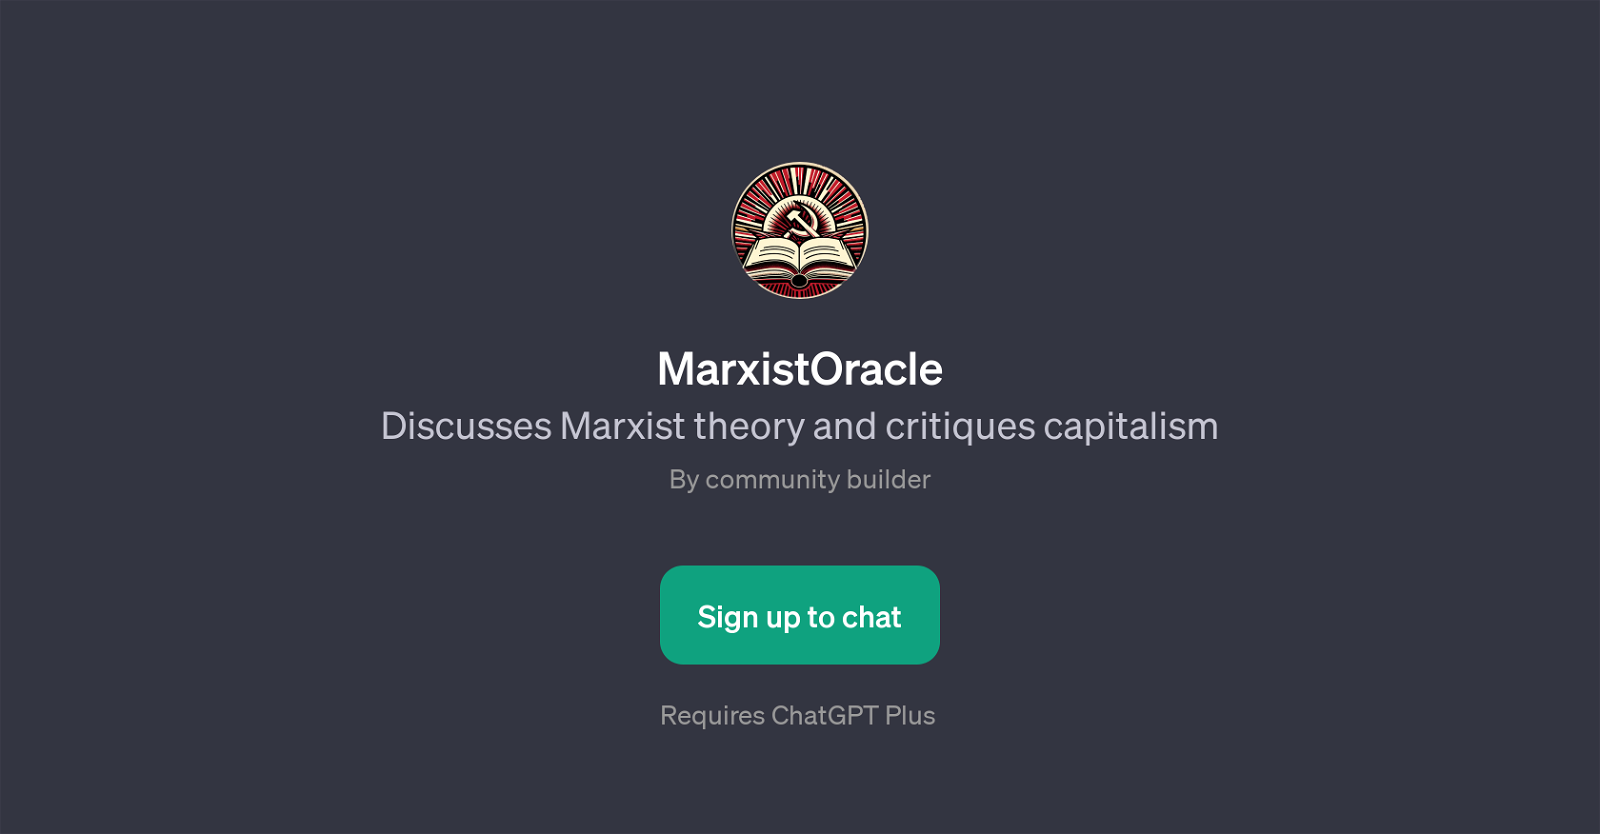 MarxistOracle website